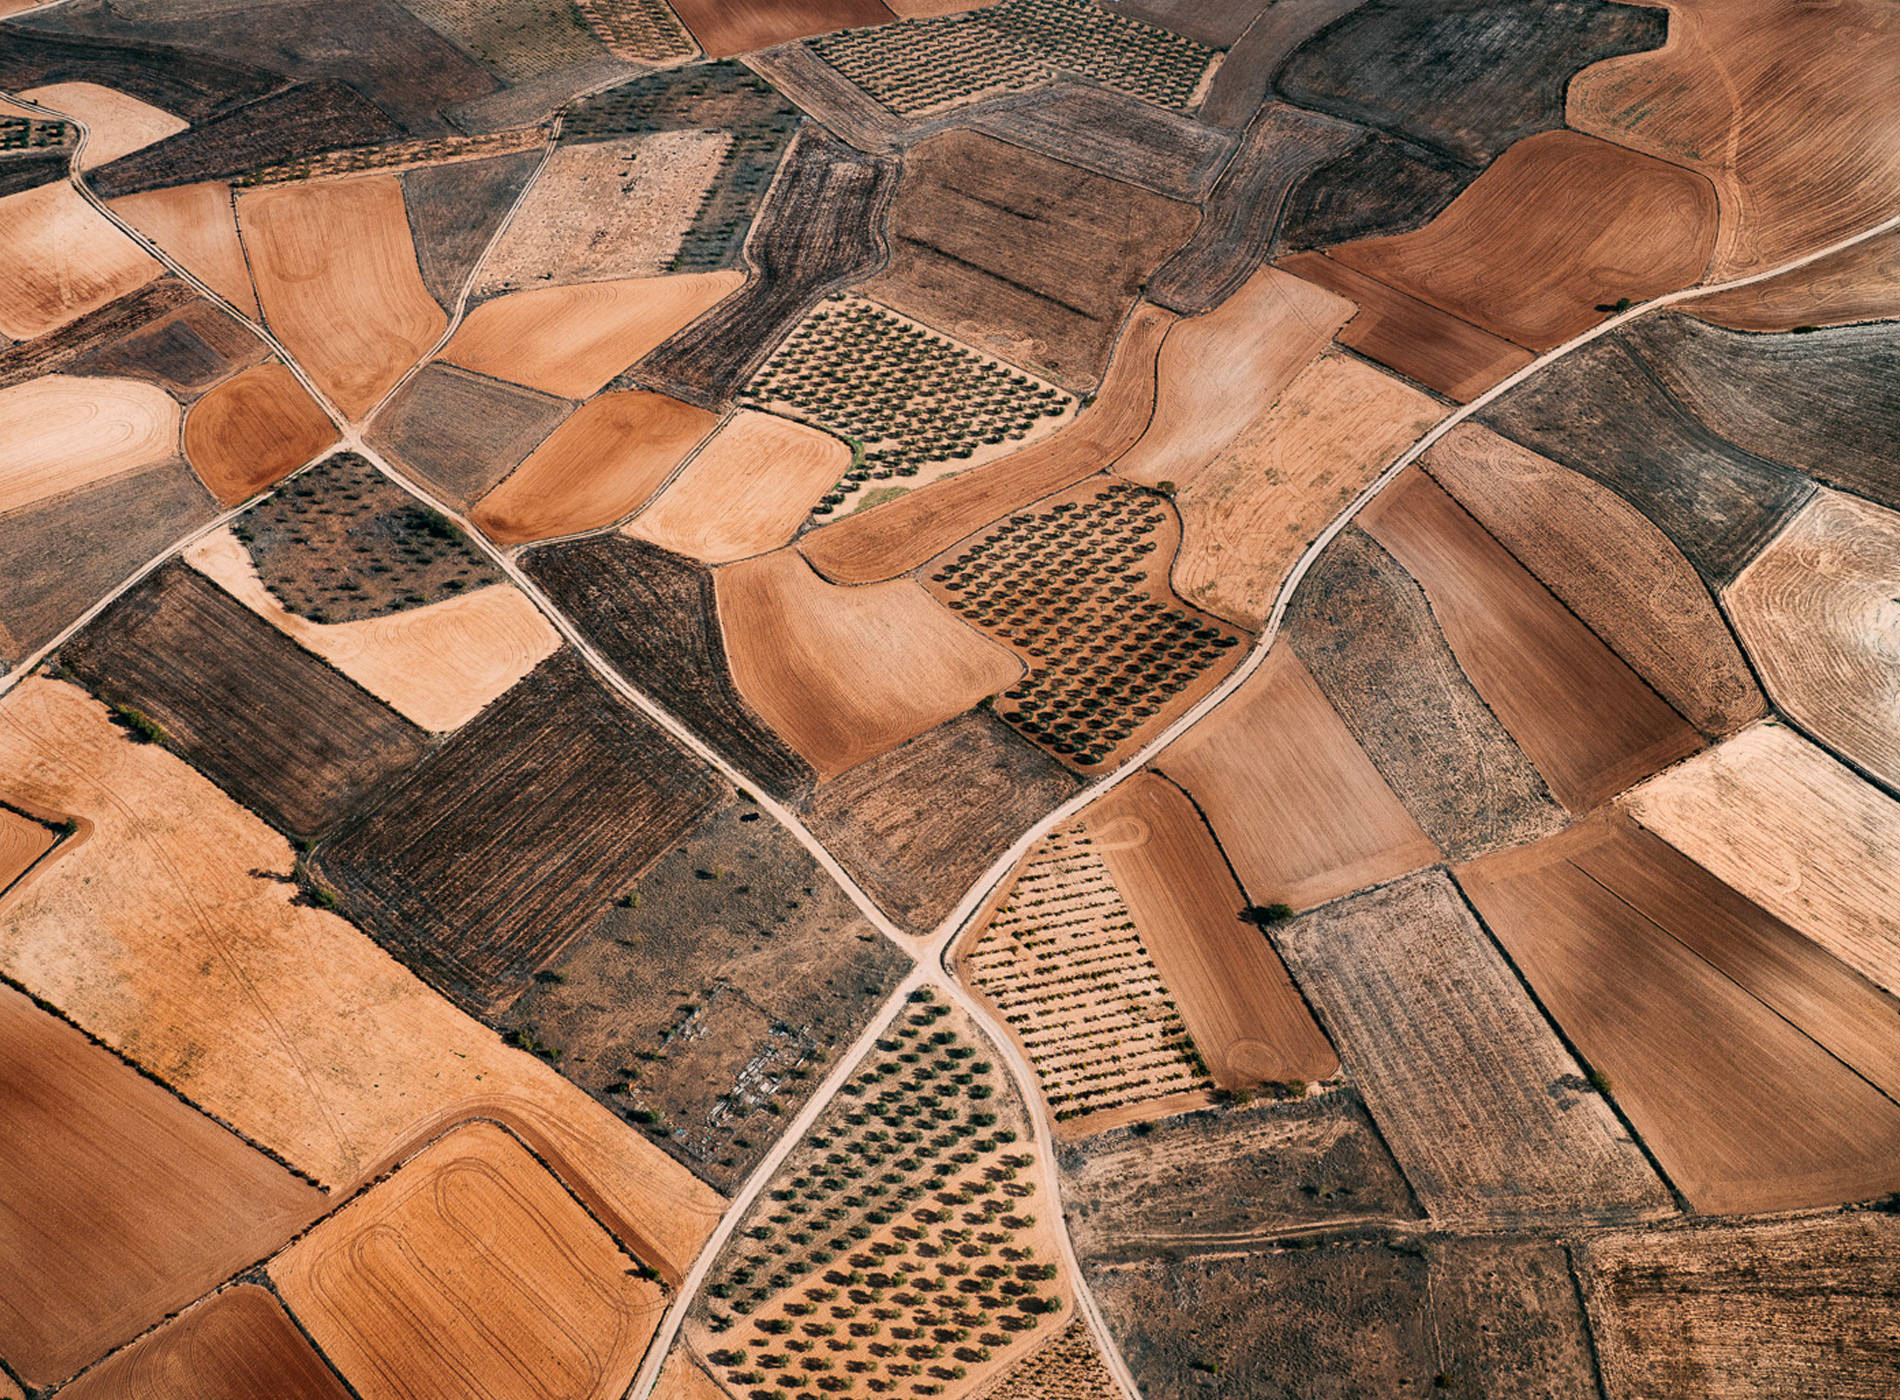 Tom Hegen Photographie The Spanish Farmland Series